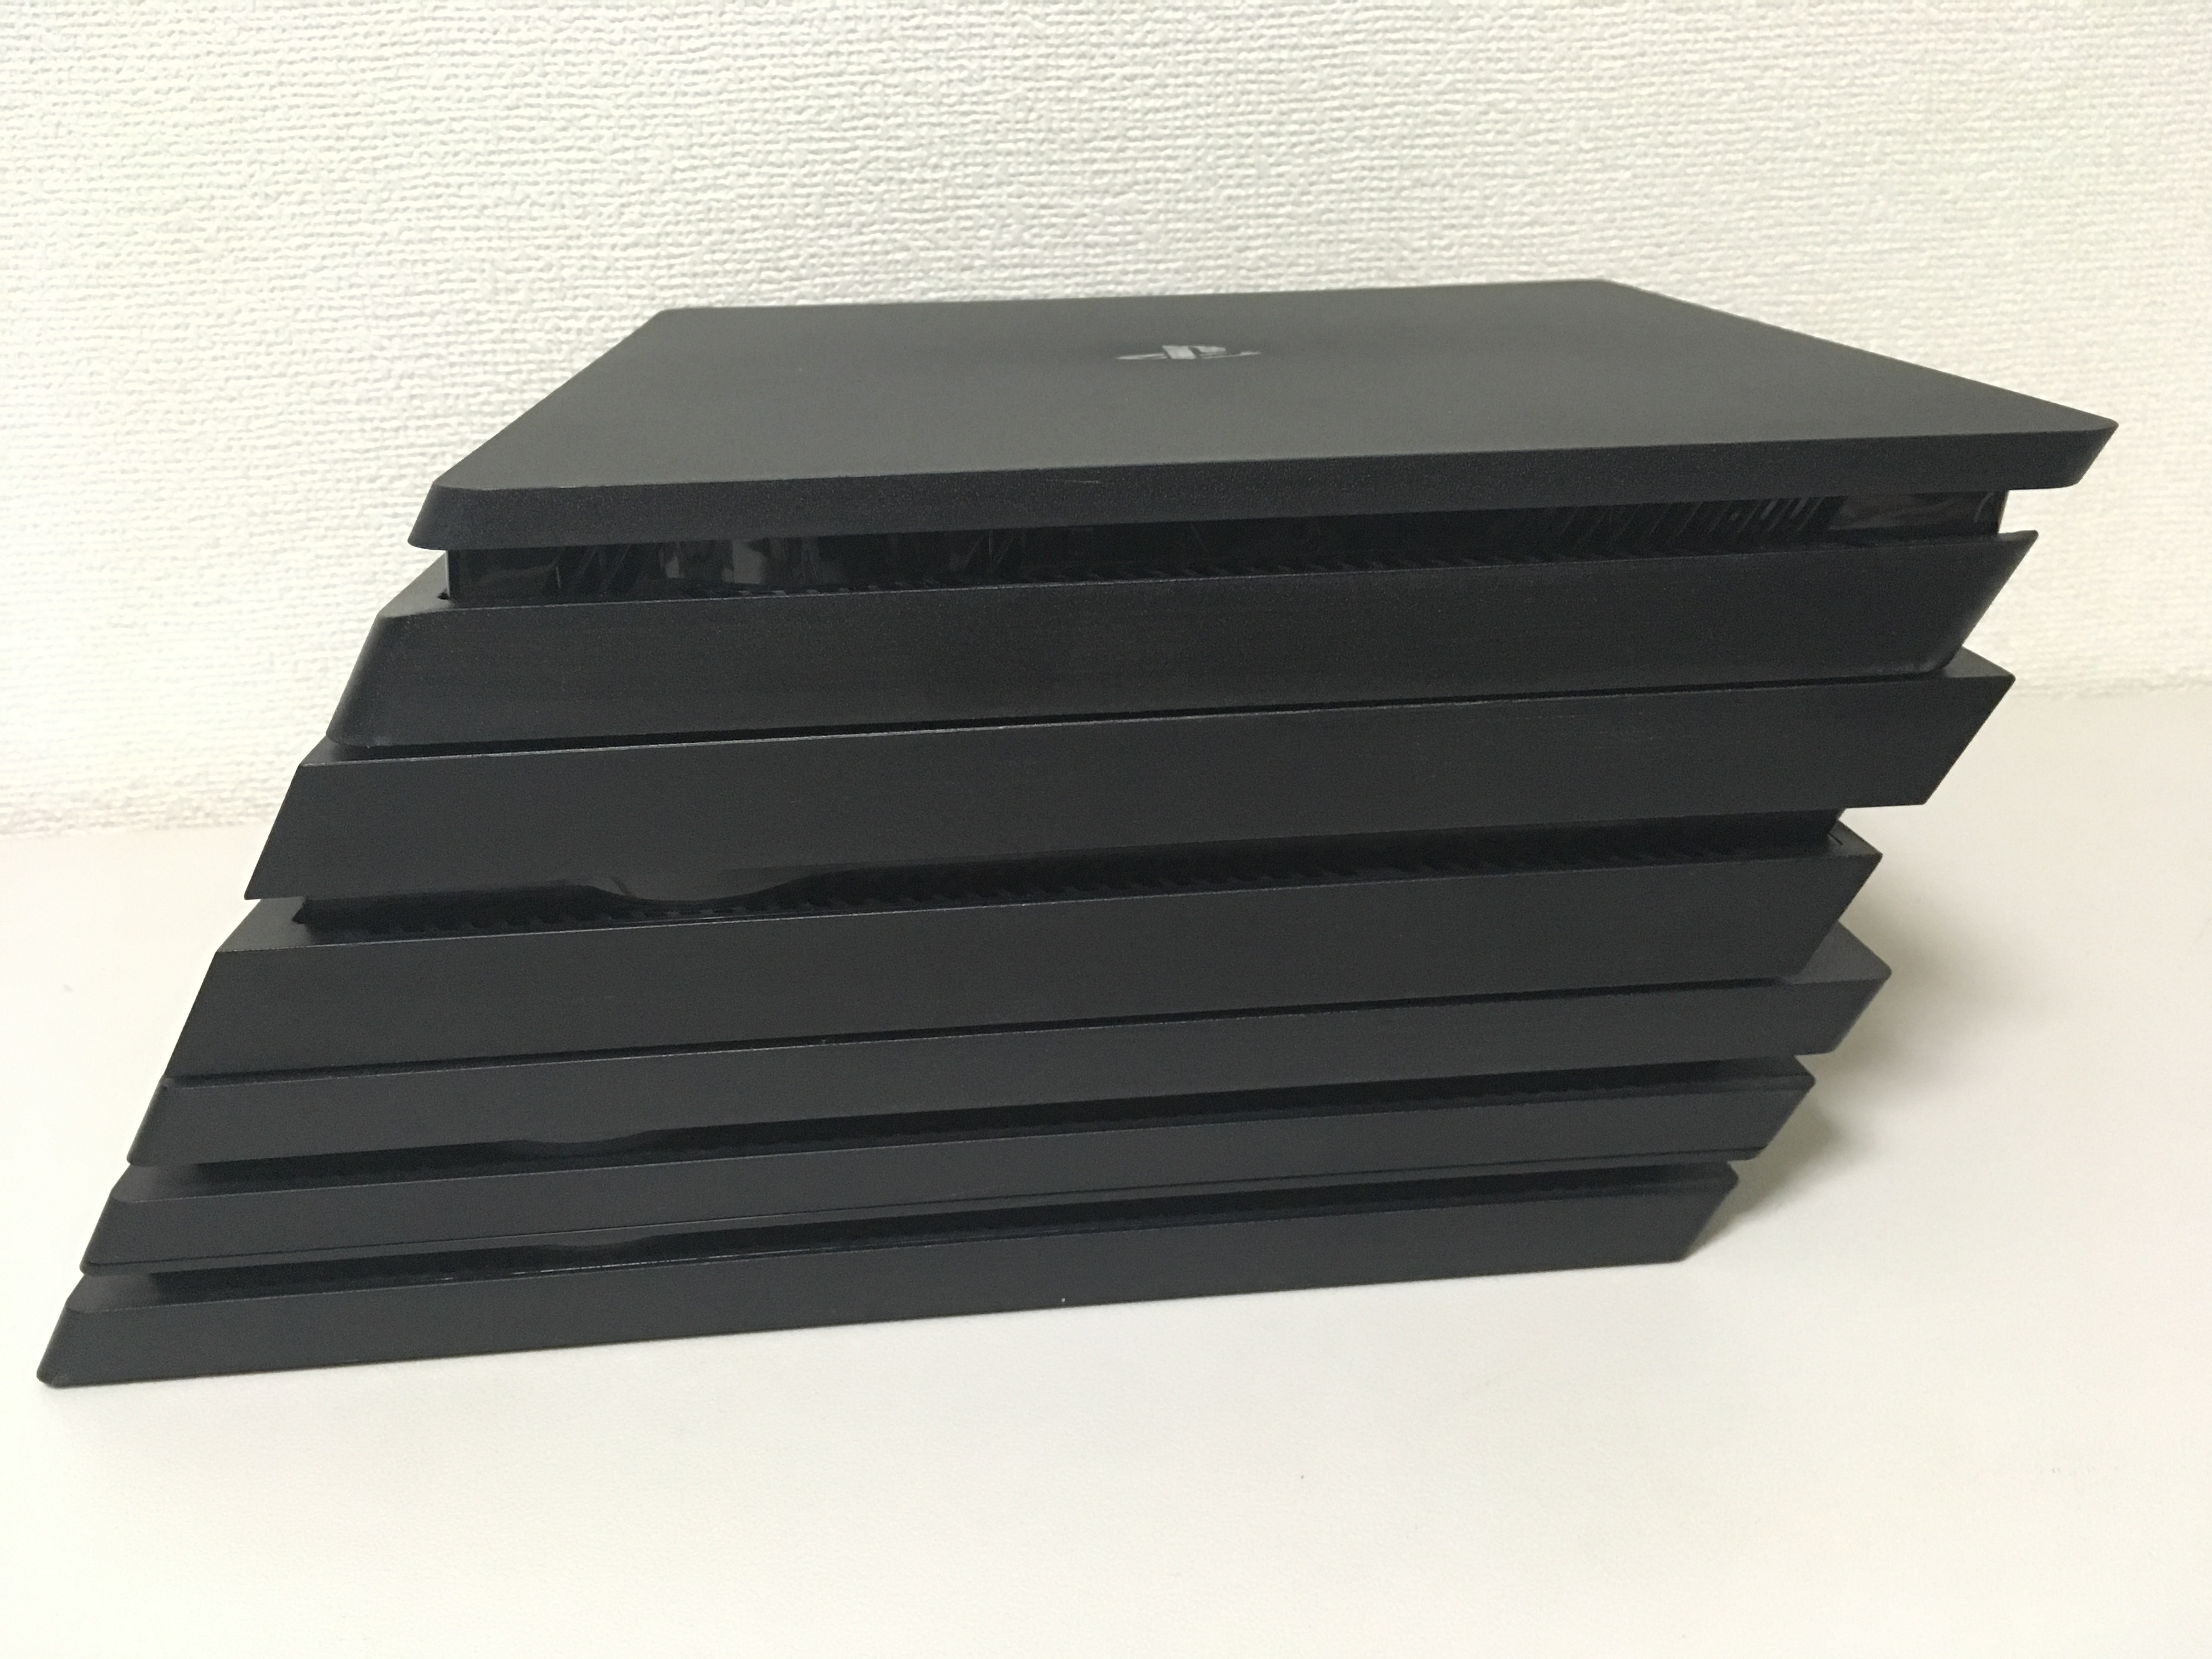 PlayStation 4 (プレイステーション4) 本体 初期型